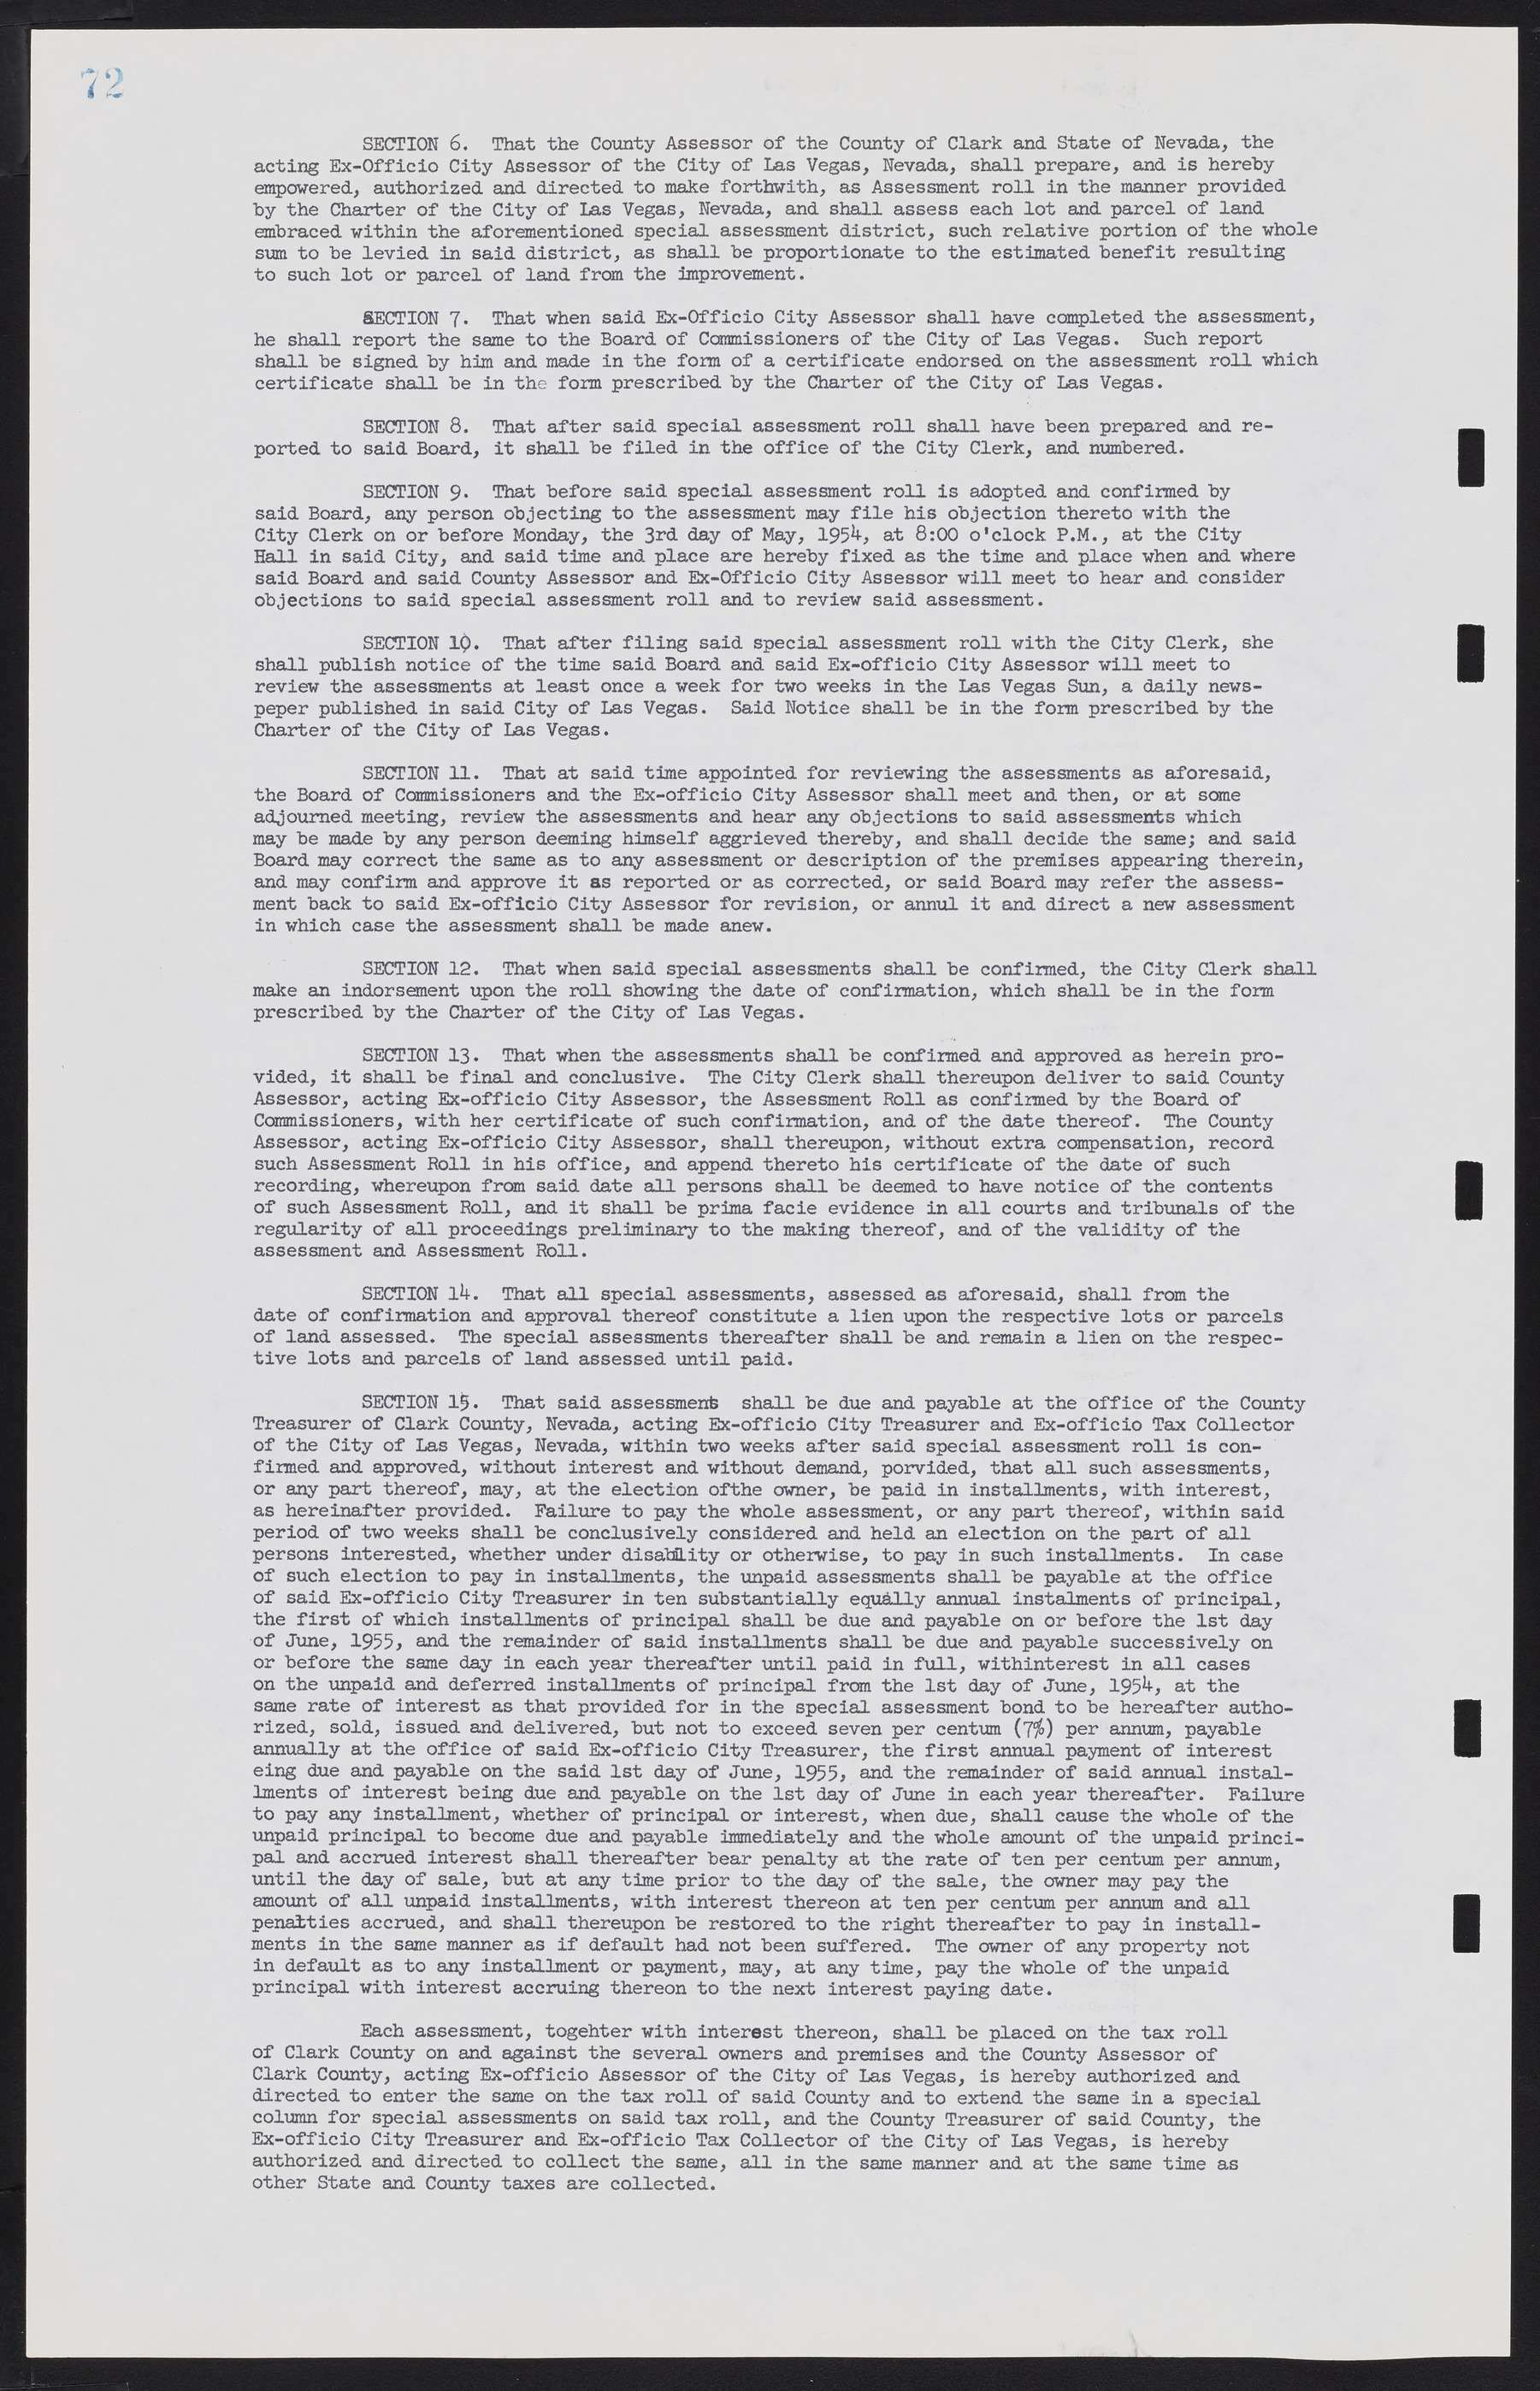 Las Vegas City Commission Minutes, February 17, 1954 to September 21, 1955, lvc000009-76